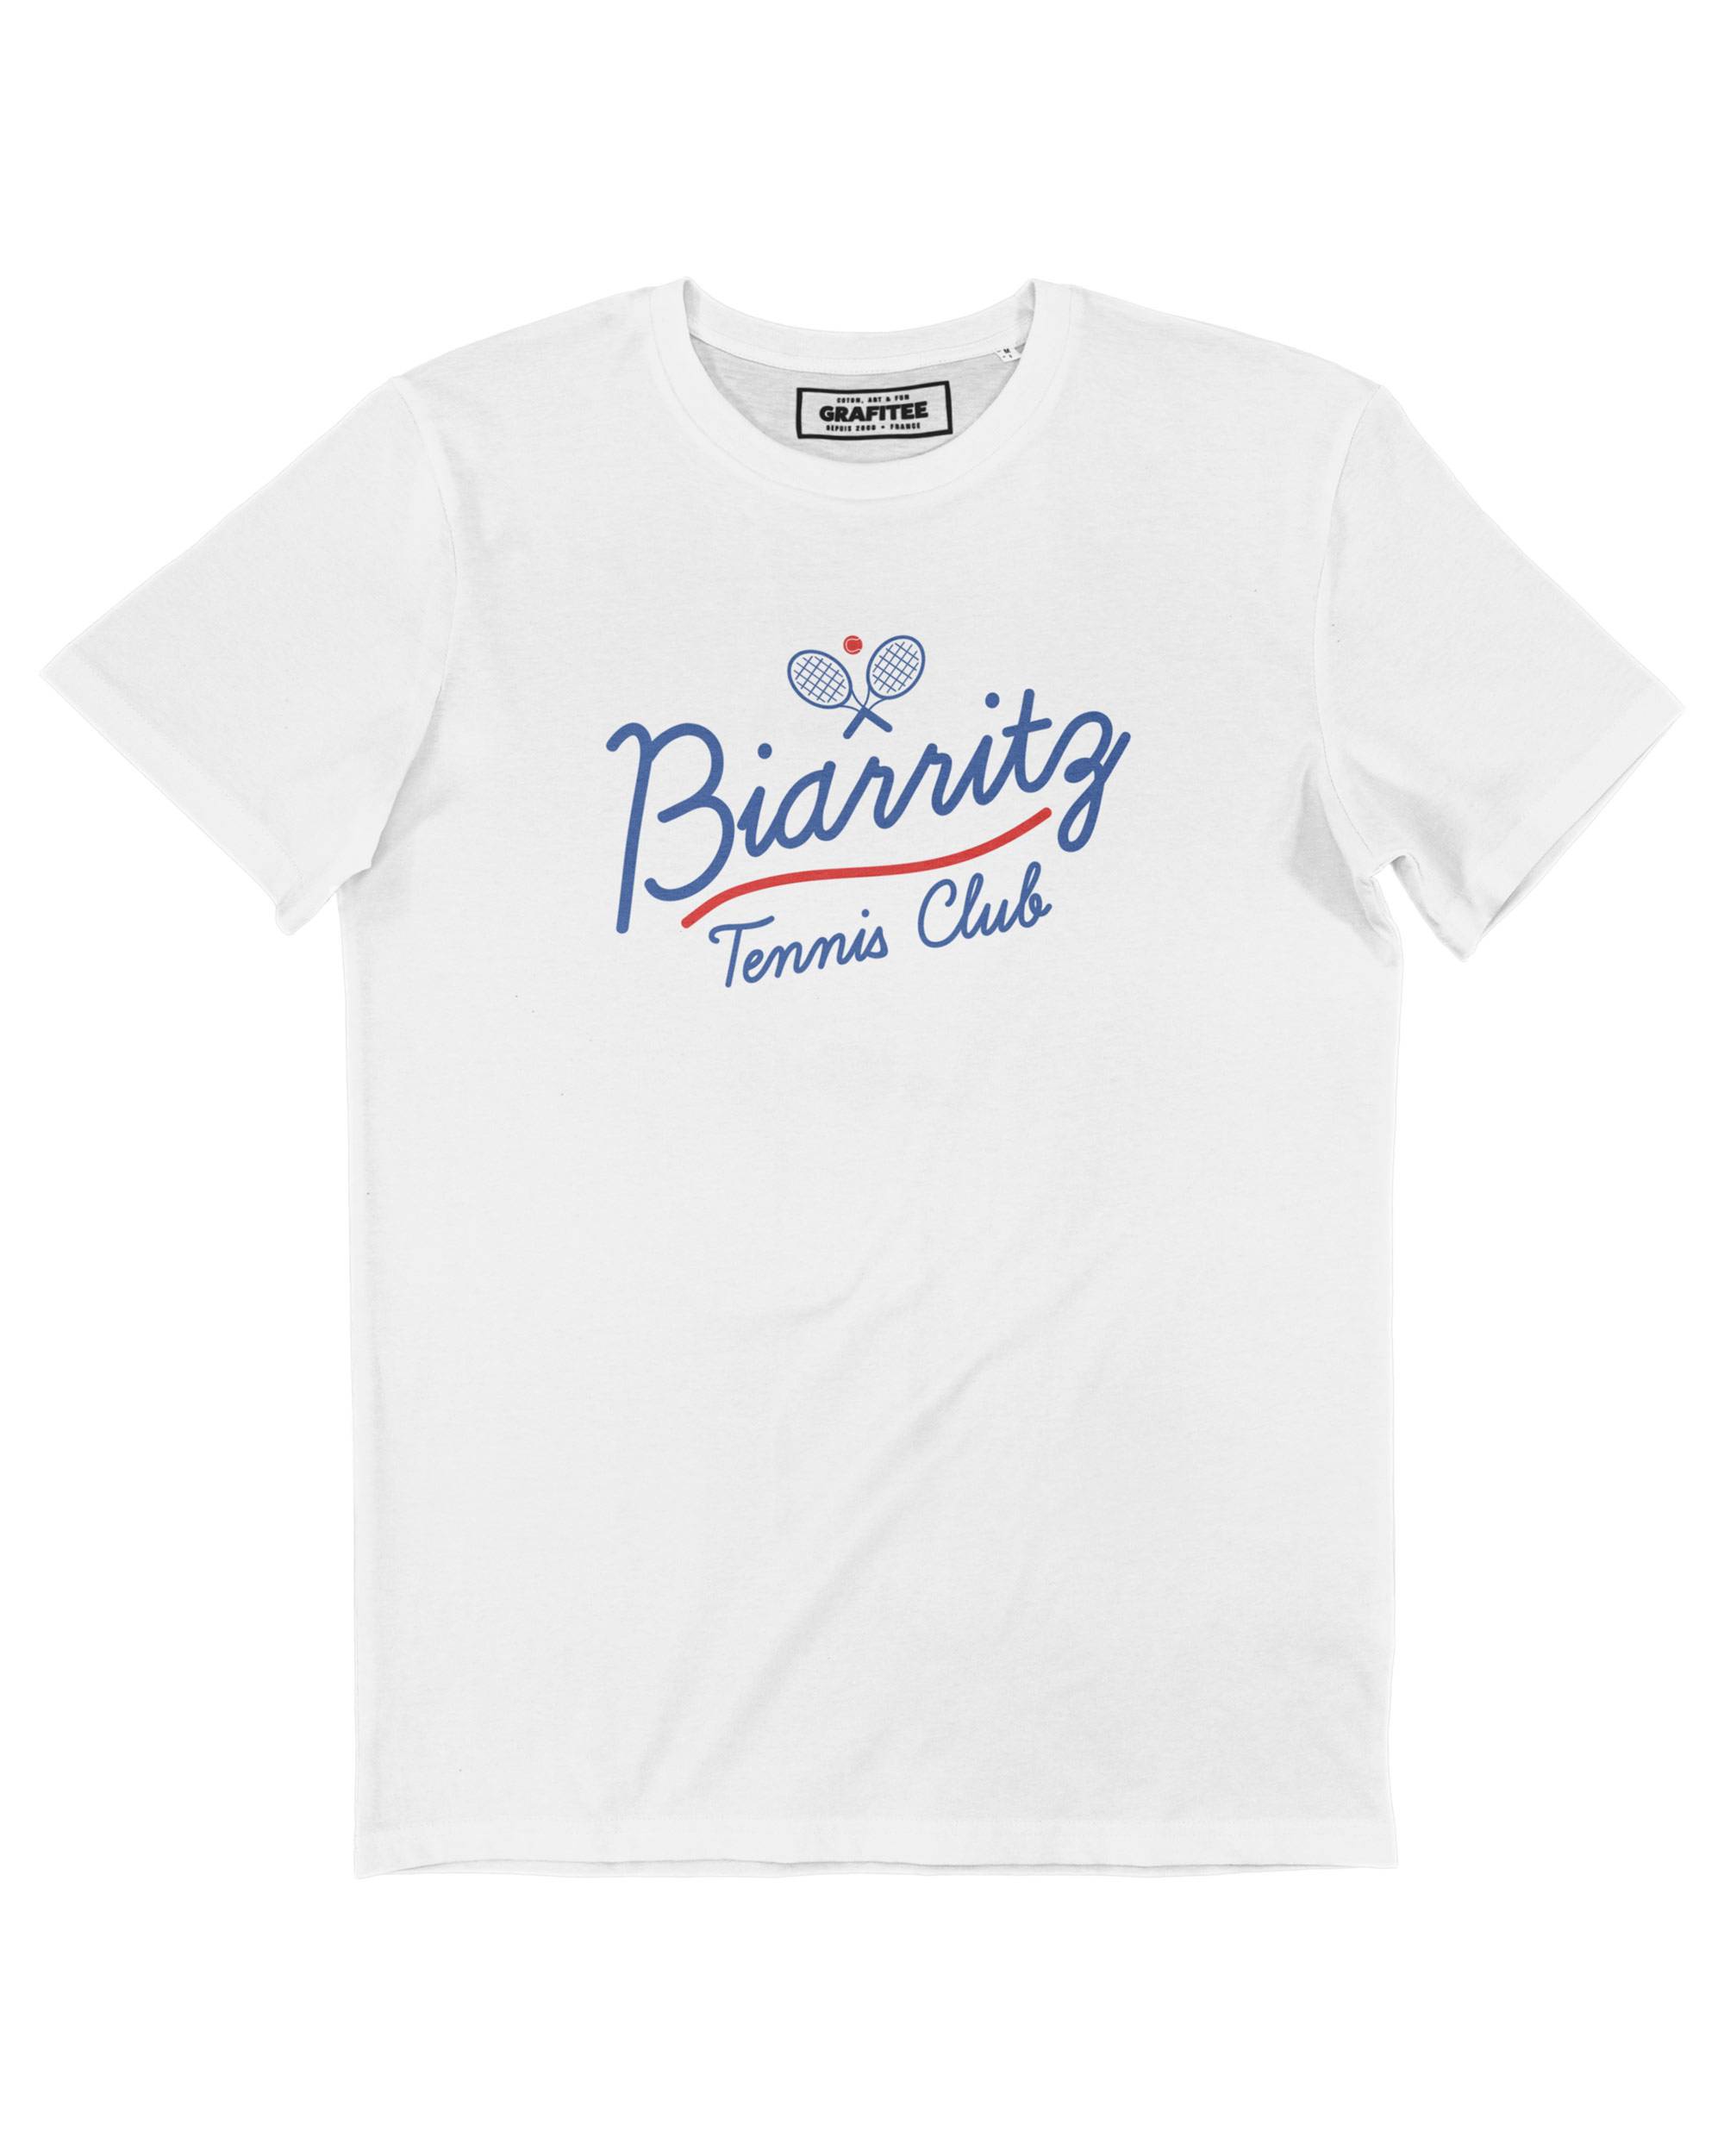 T-shirt Biarritz Tennis Club Grafitee